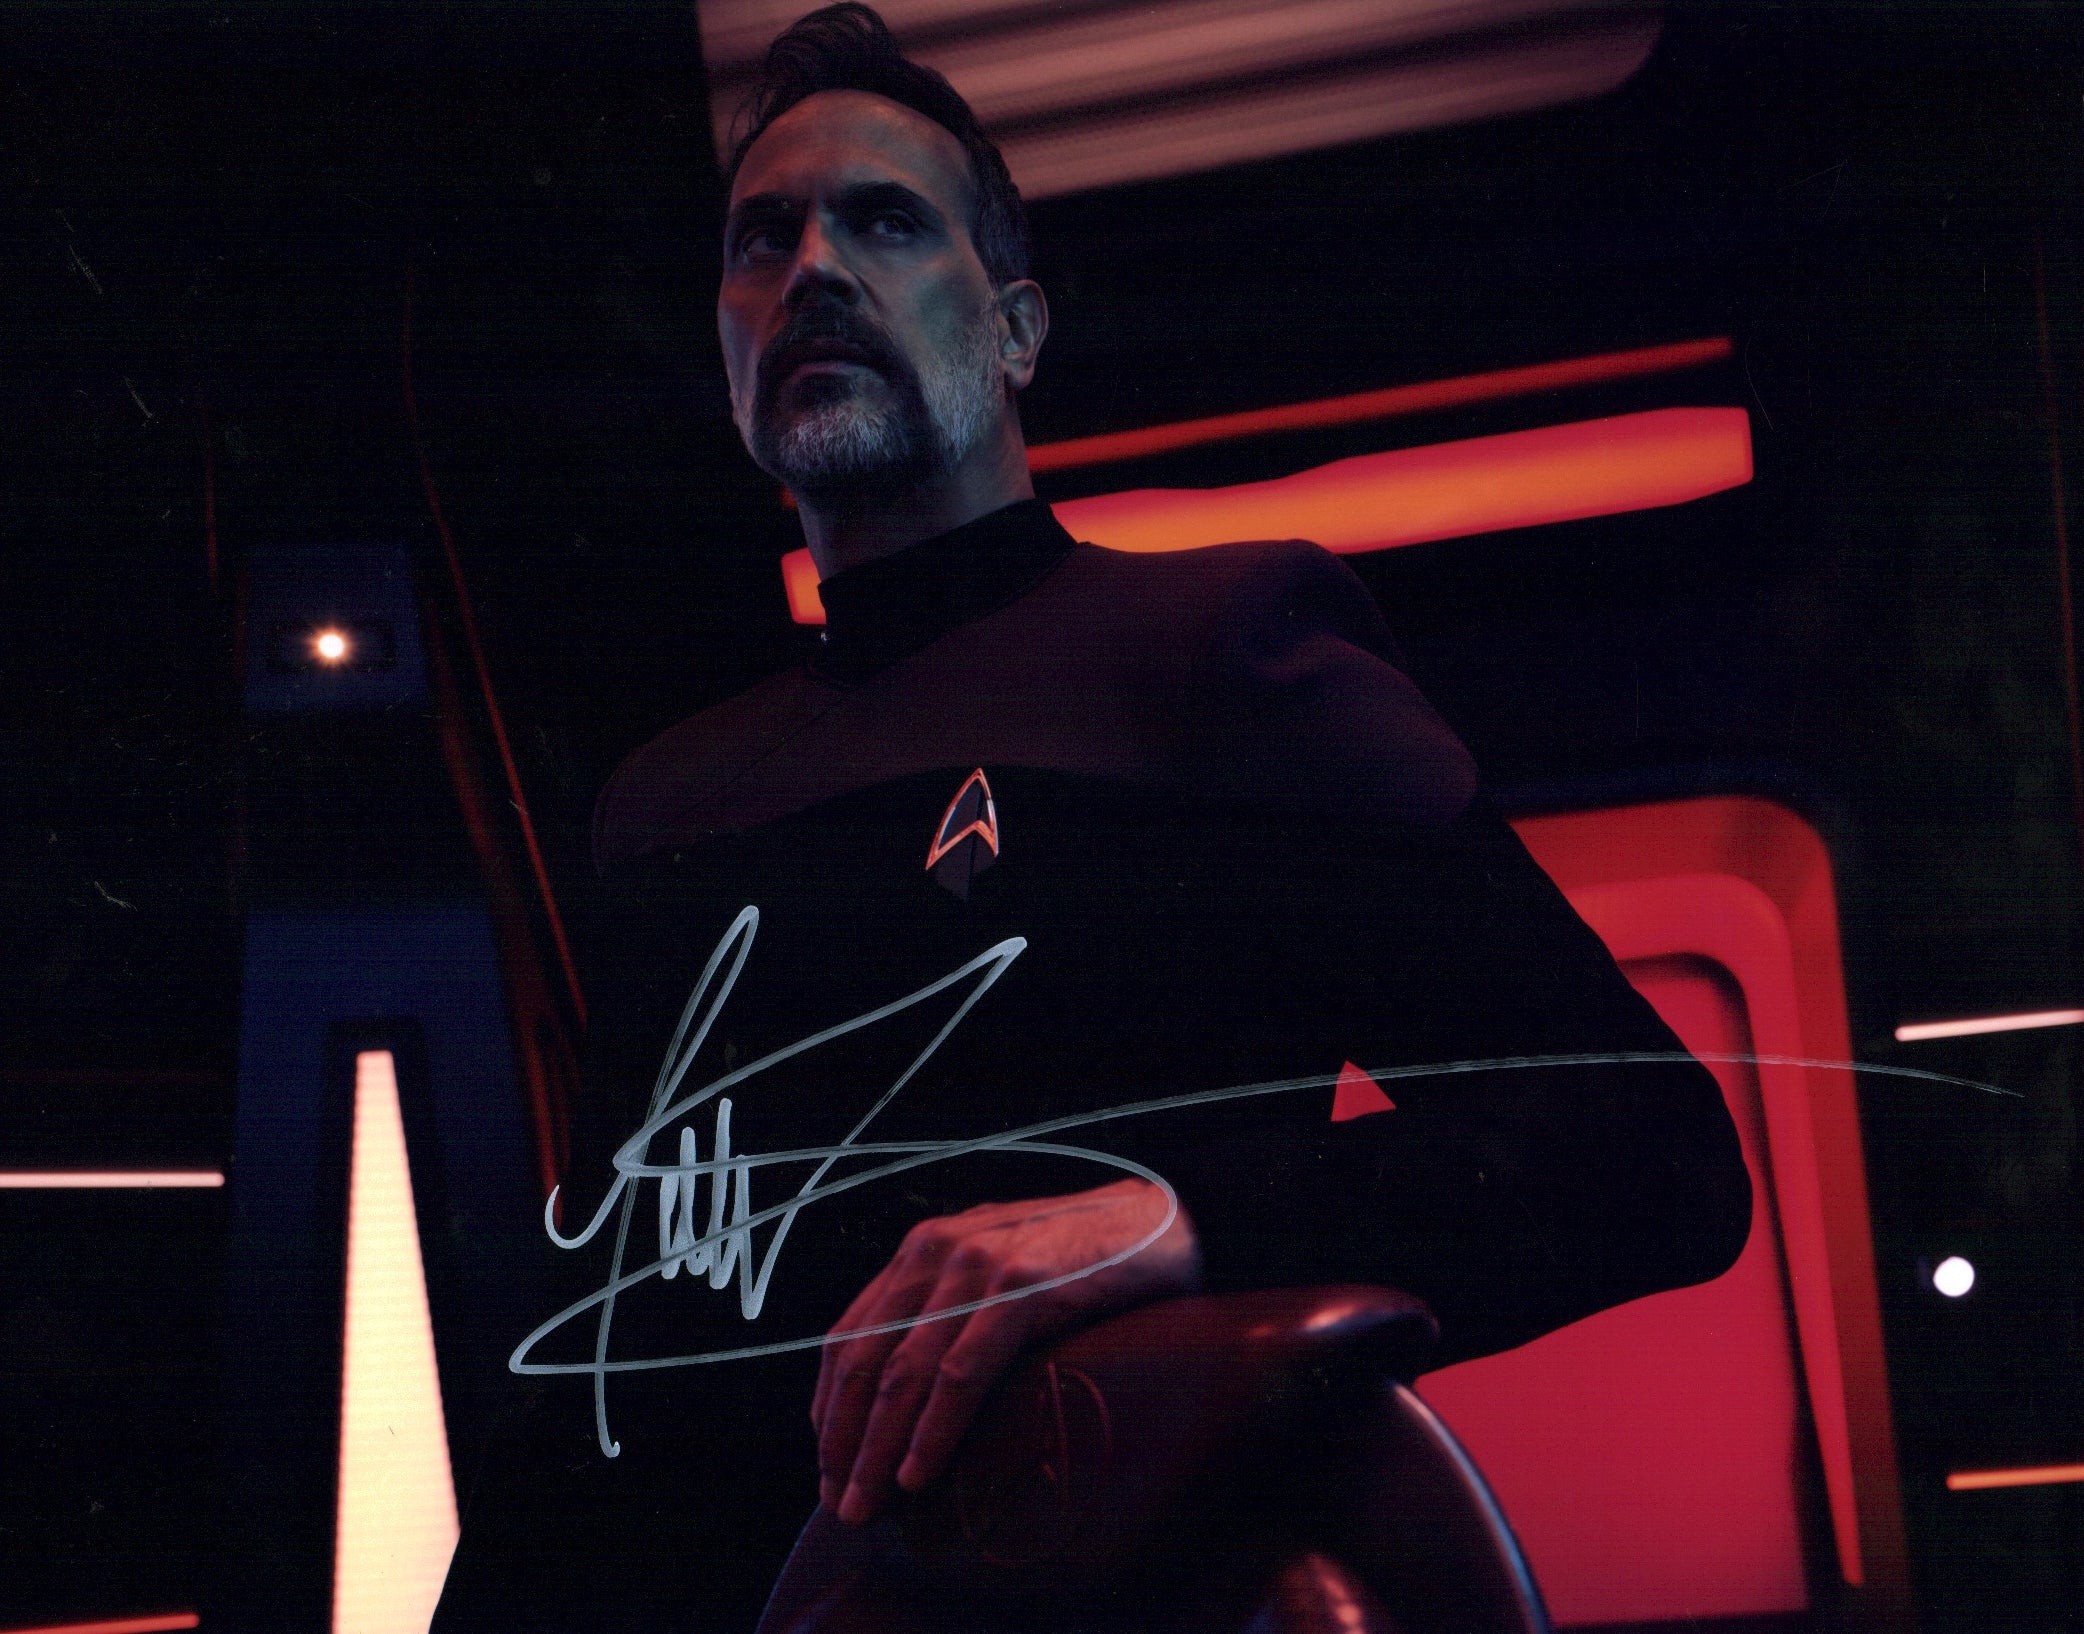 Todd Stashwick Star Trek: Picard 11x14 Signed Mini Poster JSA Certified Autograph GalaxyCon